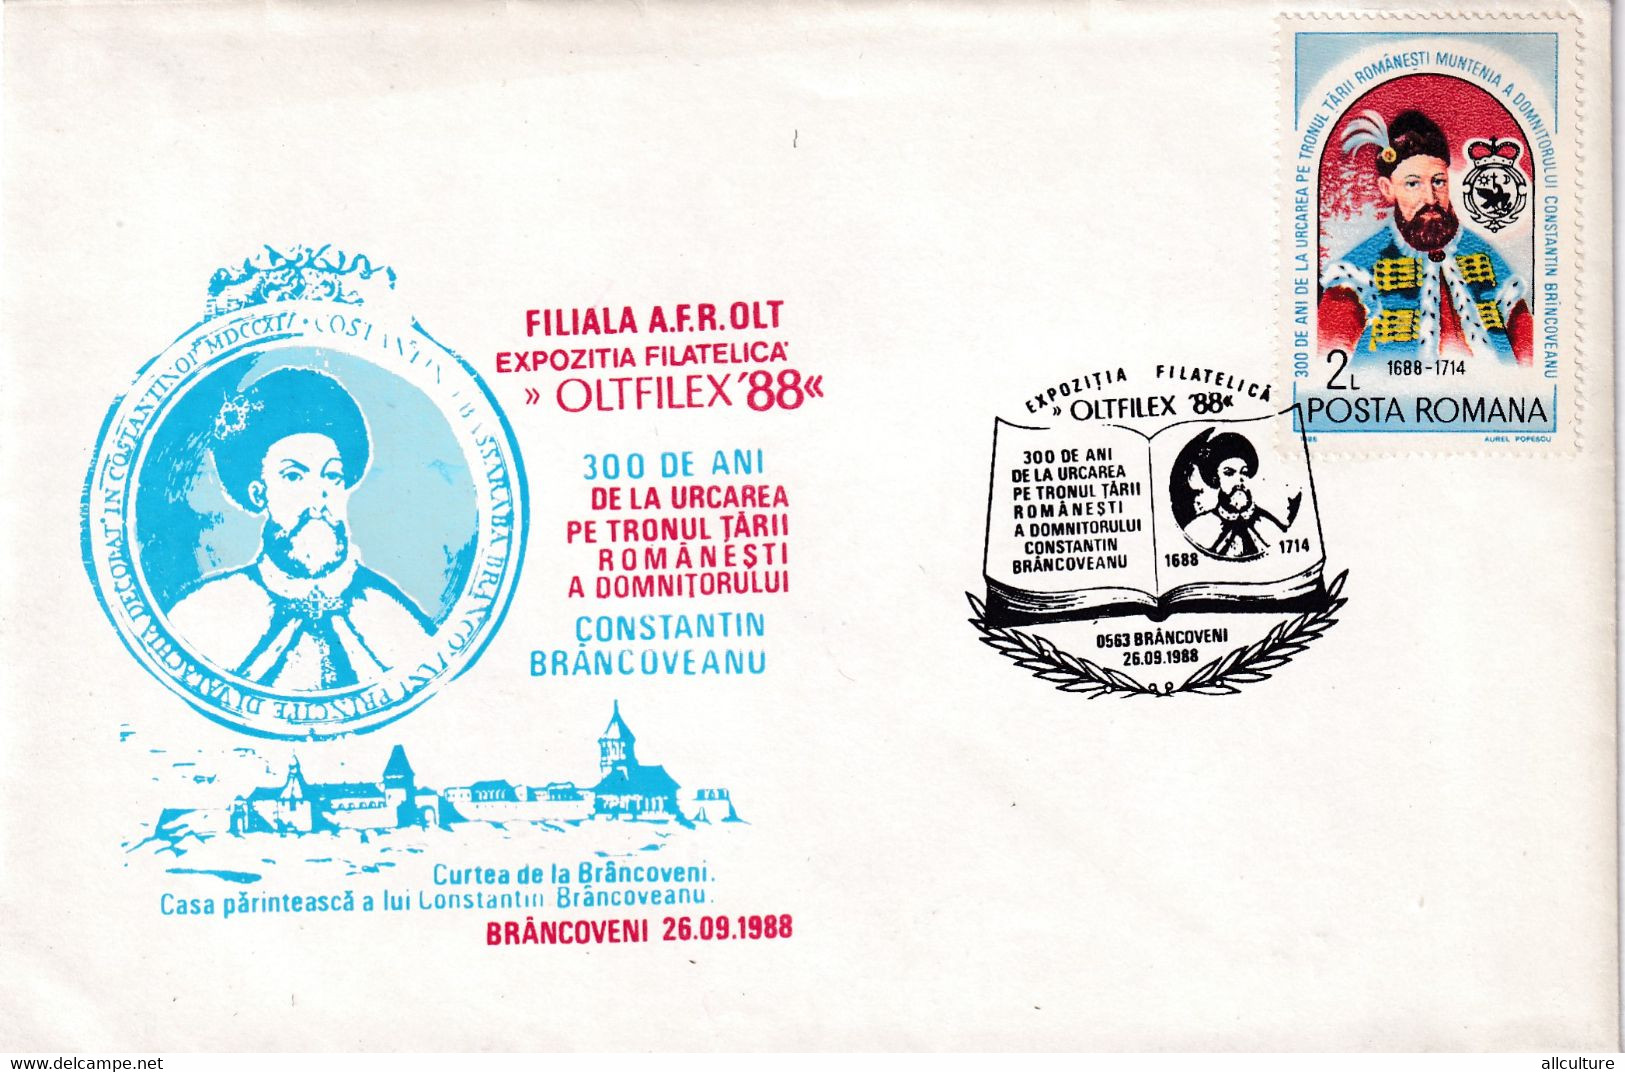 A3090 - Expozitia Filatelica " OLTFILEX '88 " Constantin Brancoveanu, Brancoveni 1988, Romania Posta Romana - Covers & Documents